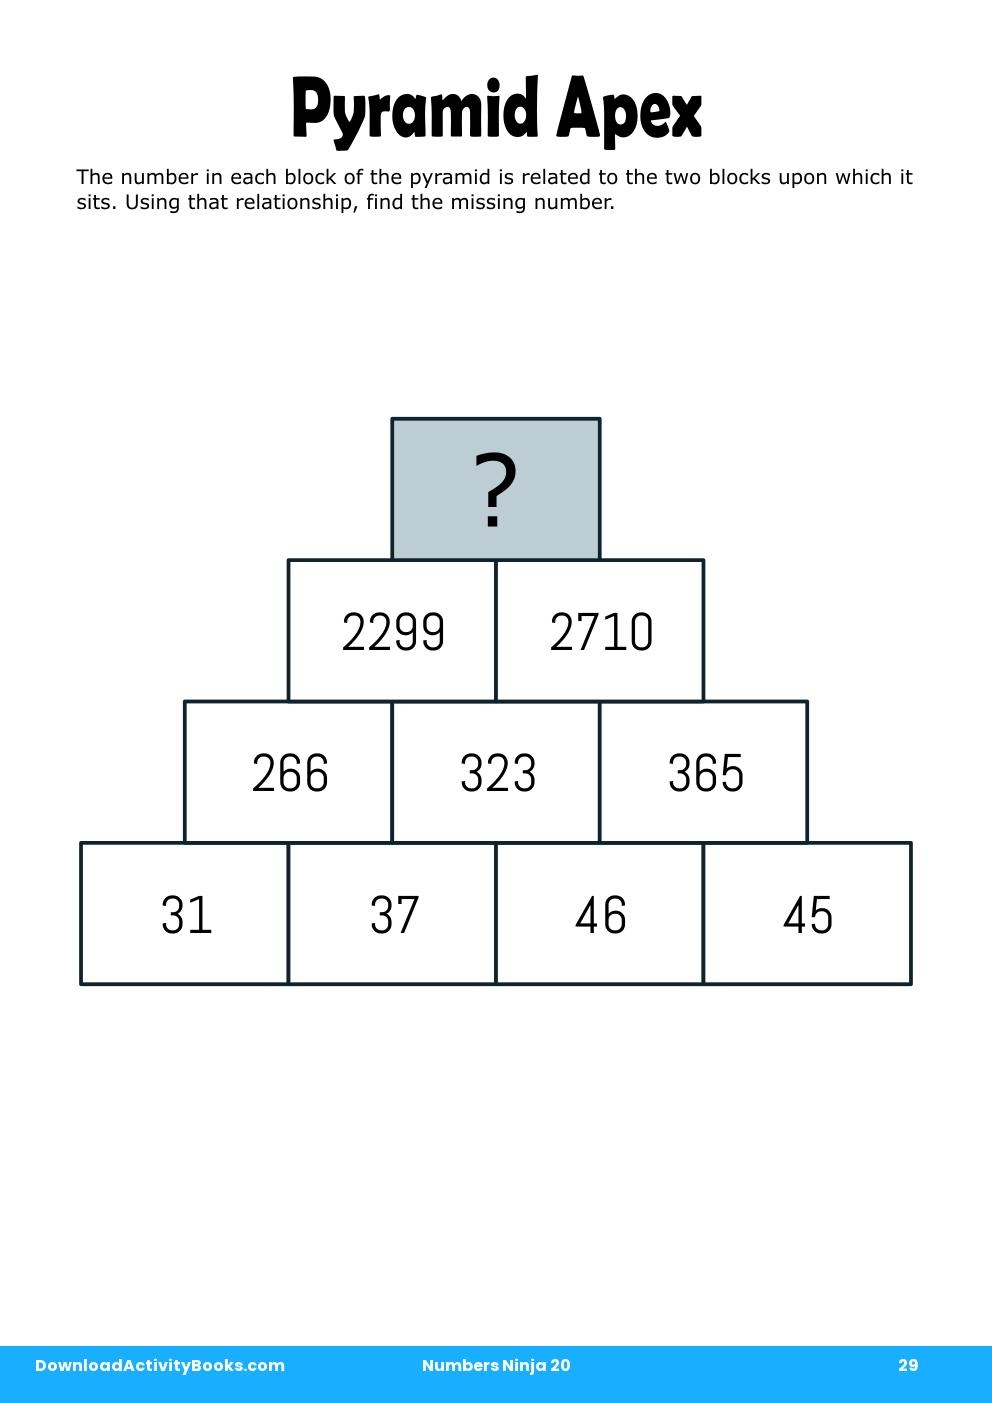 Pyramid Apex in Numbers Ninja 20